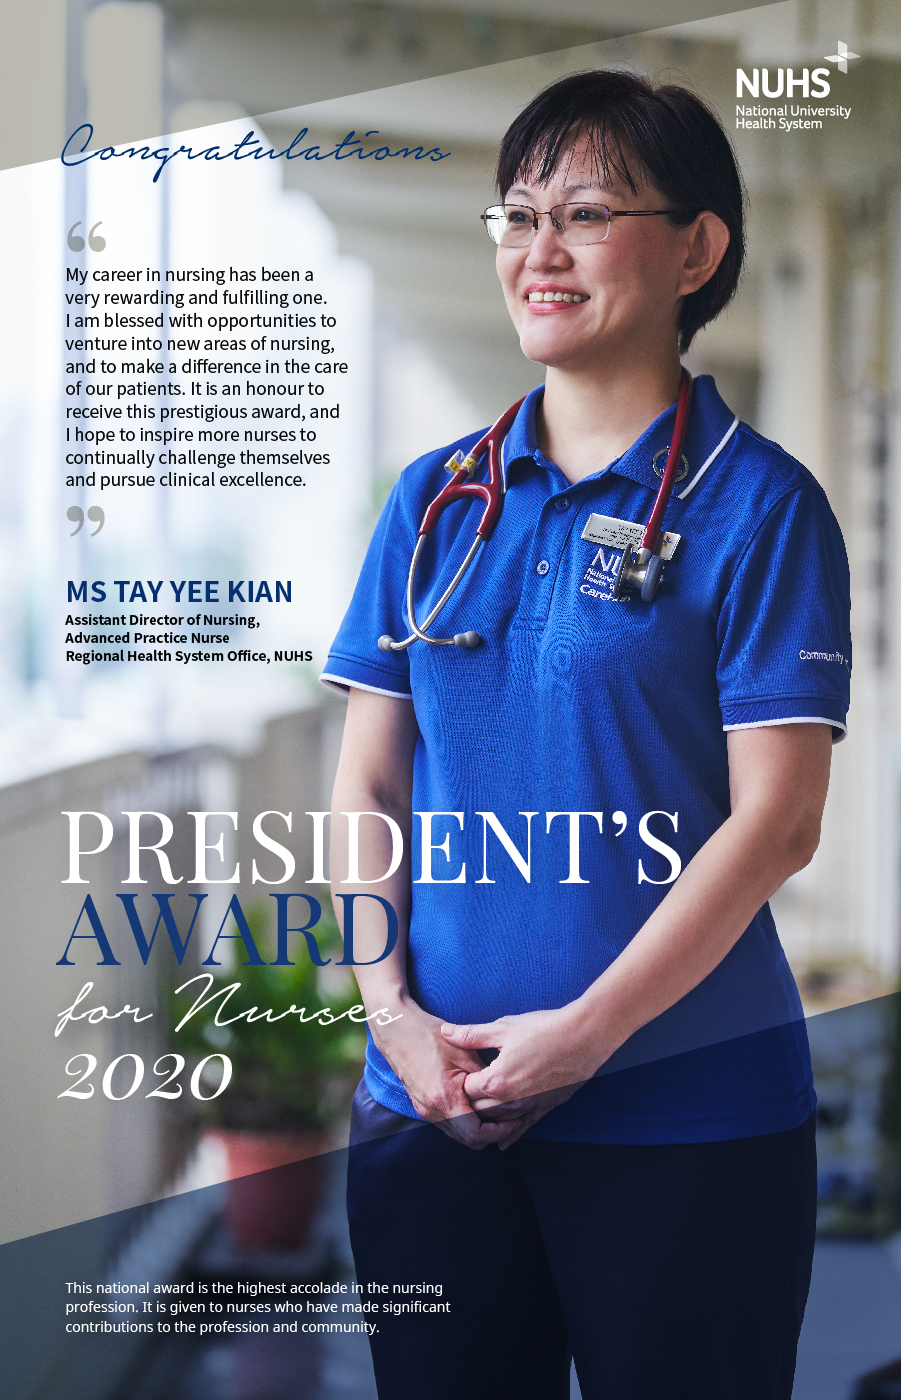 Ms Tay Yee Kian, Assistant Director of Nursing, Advanced Practice Nurses, Regional Health System Office, NUHS